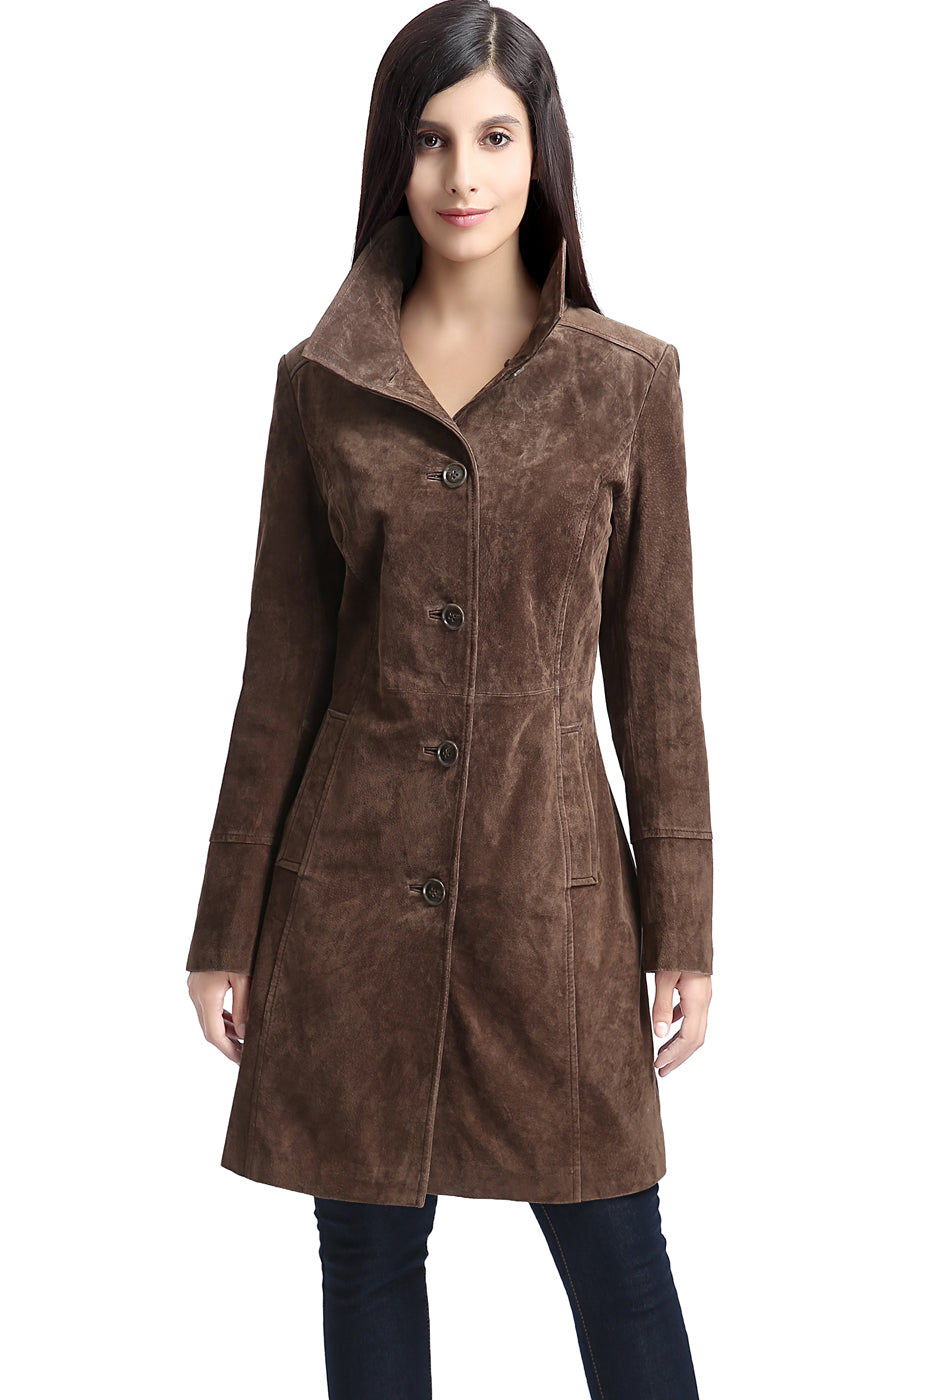 BGSD Women Aubrey Suede Leather Walking Coat